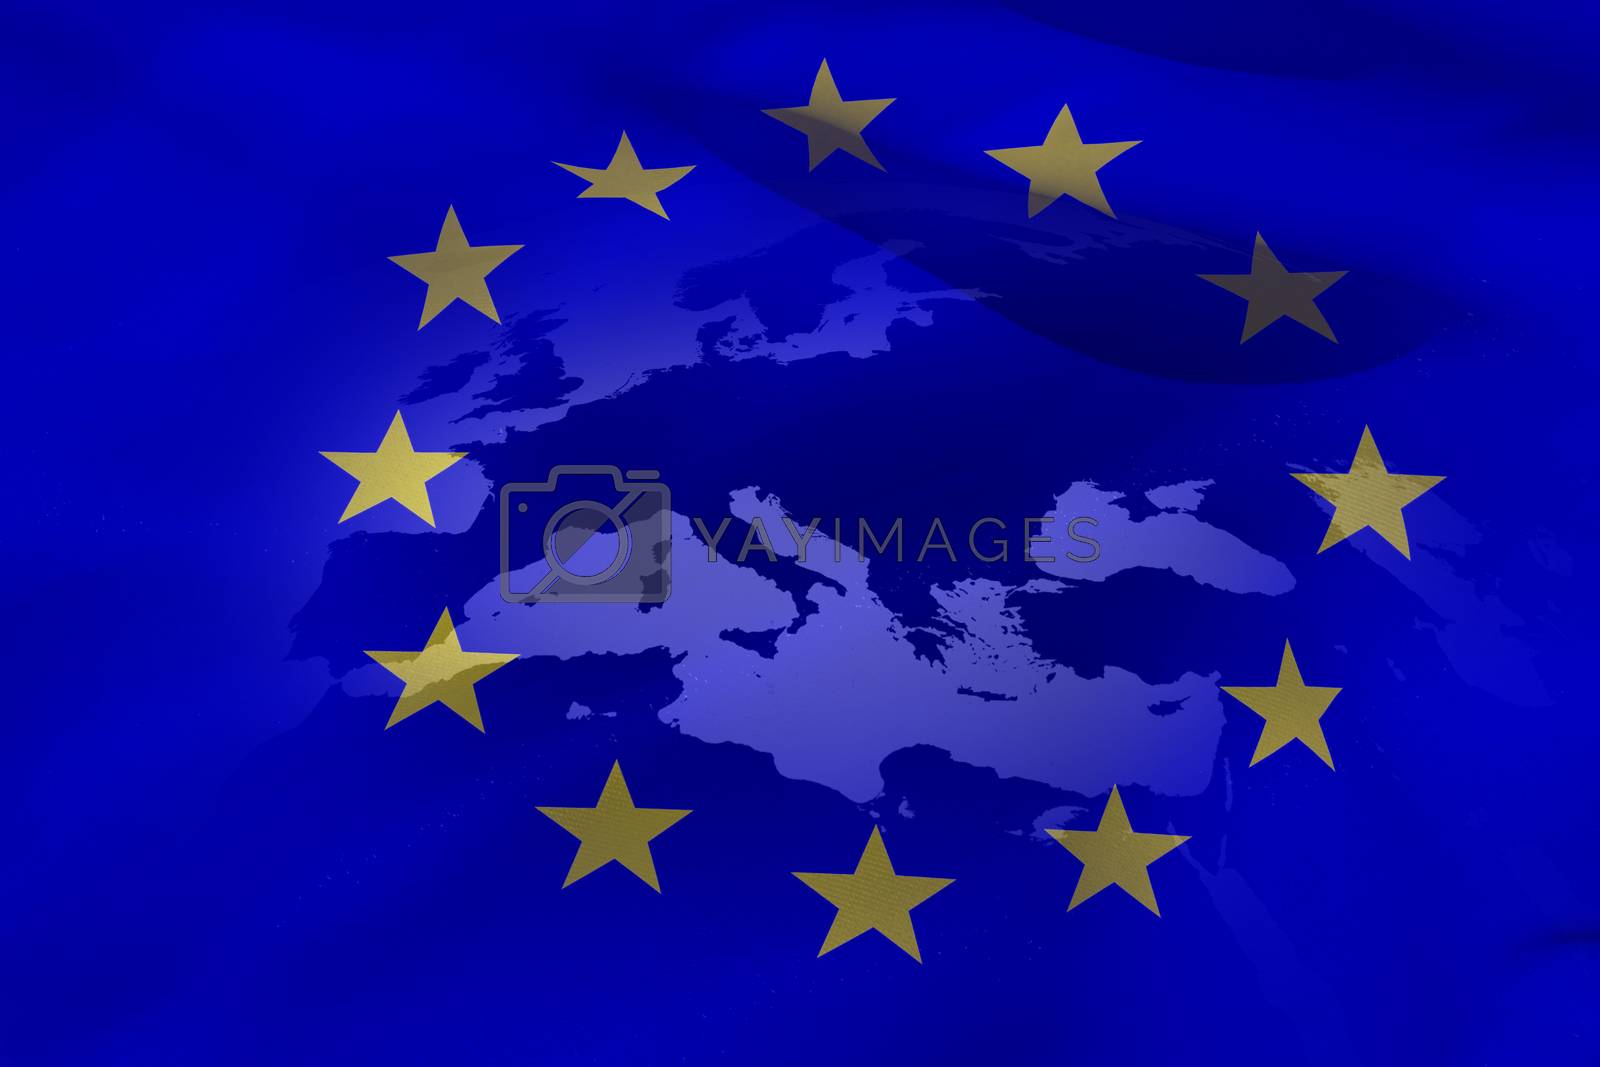 Royalty free image of European Union by Wavebreakmedia